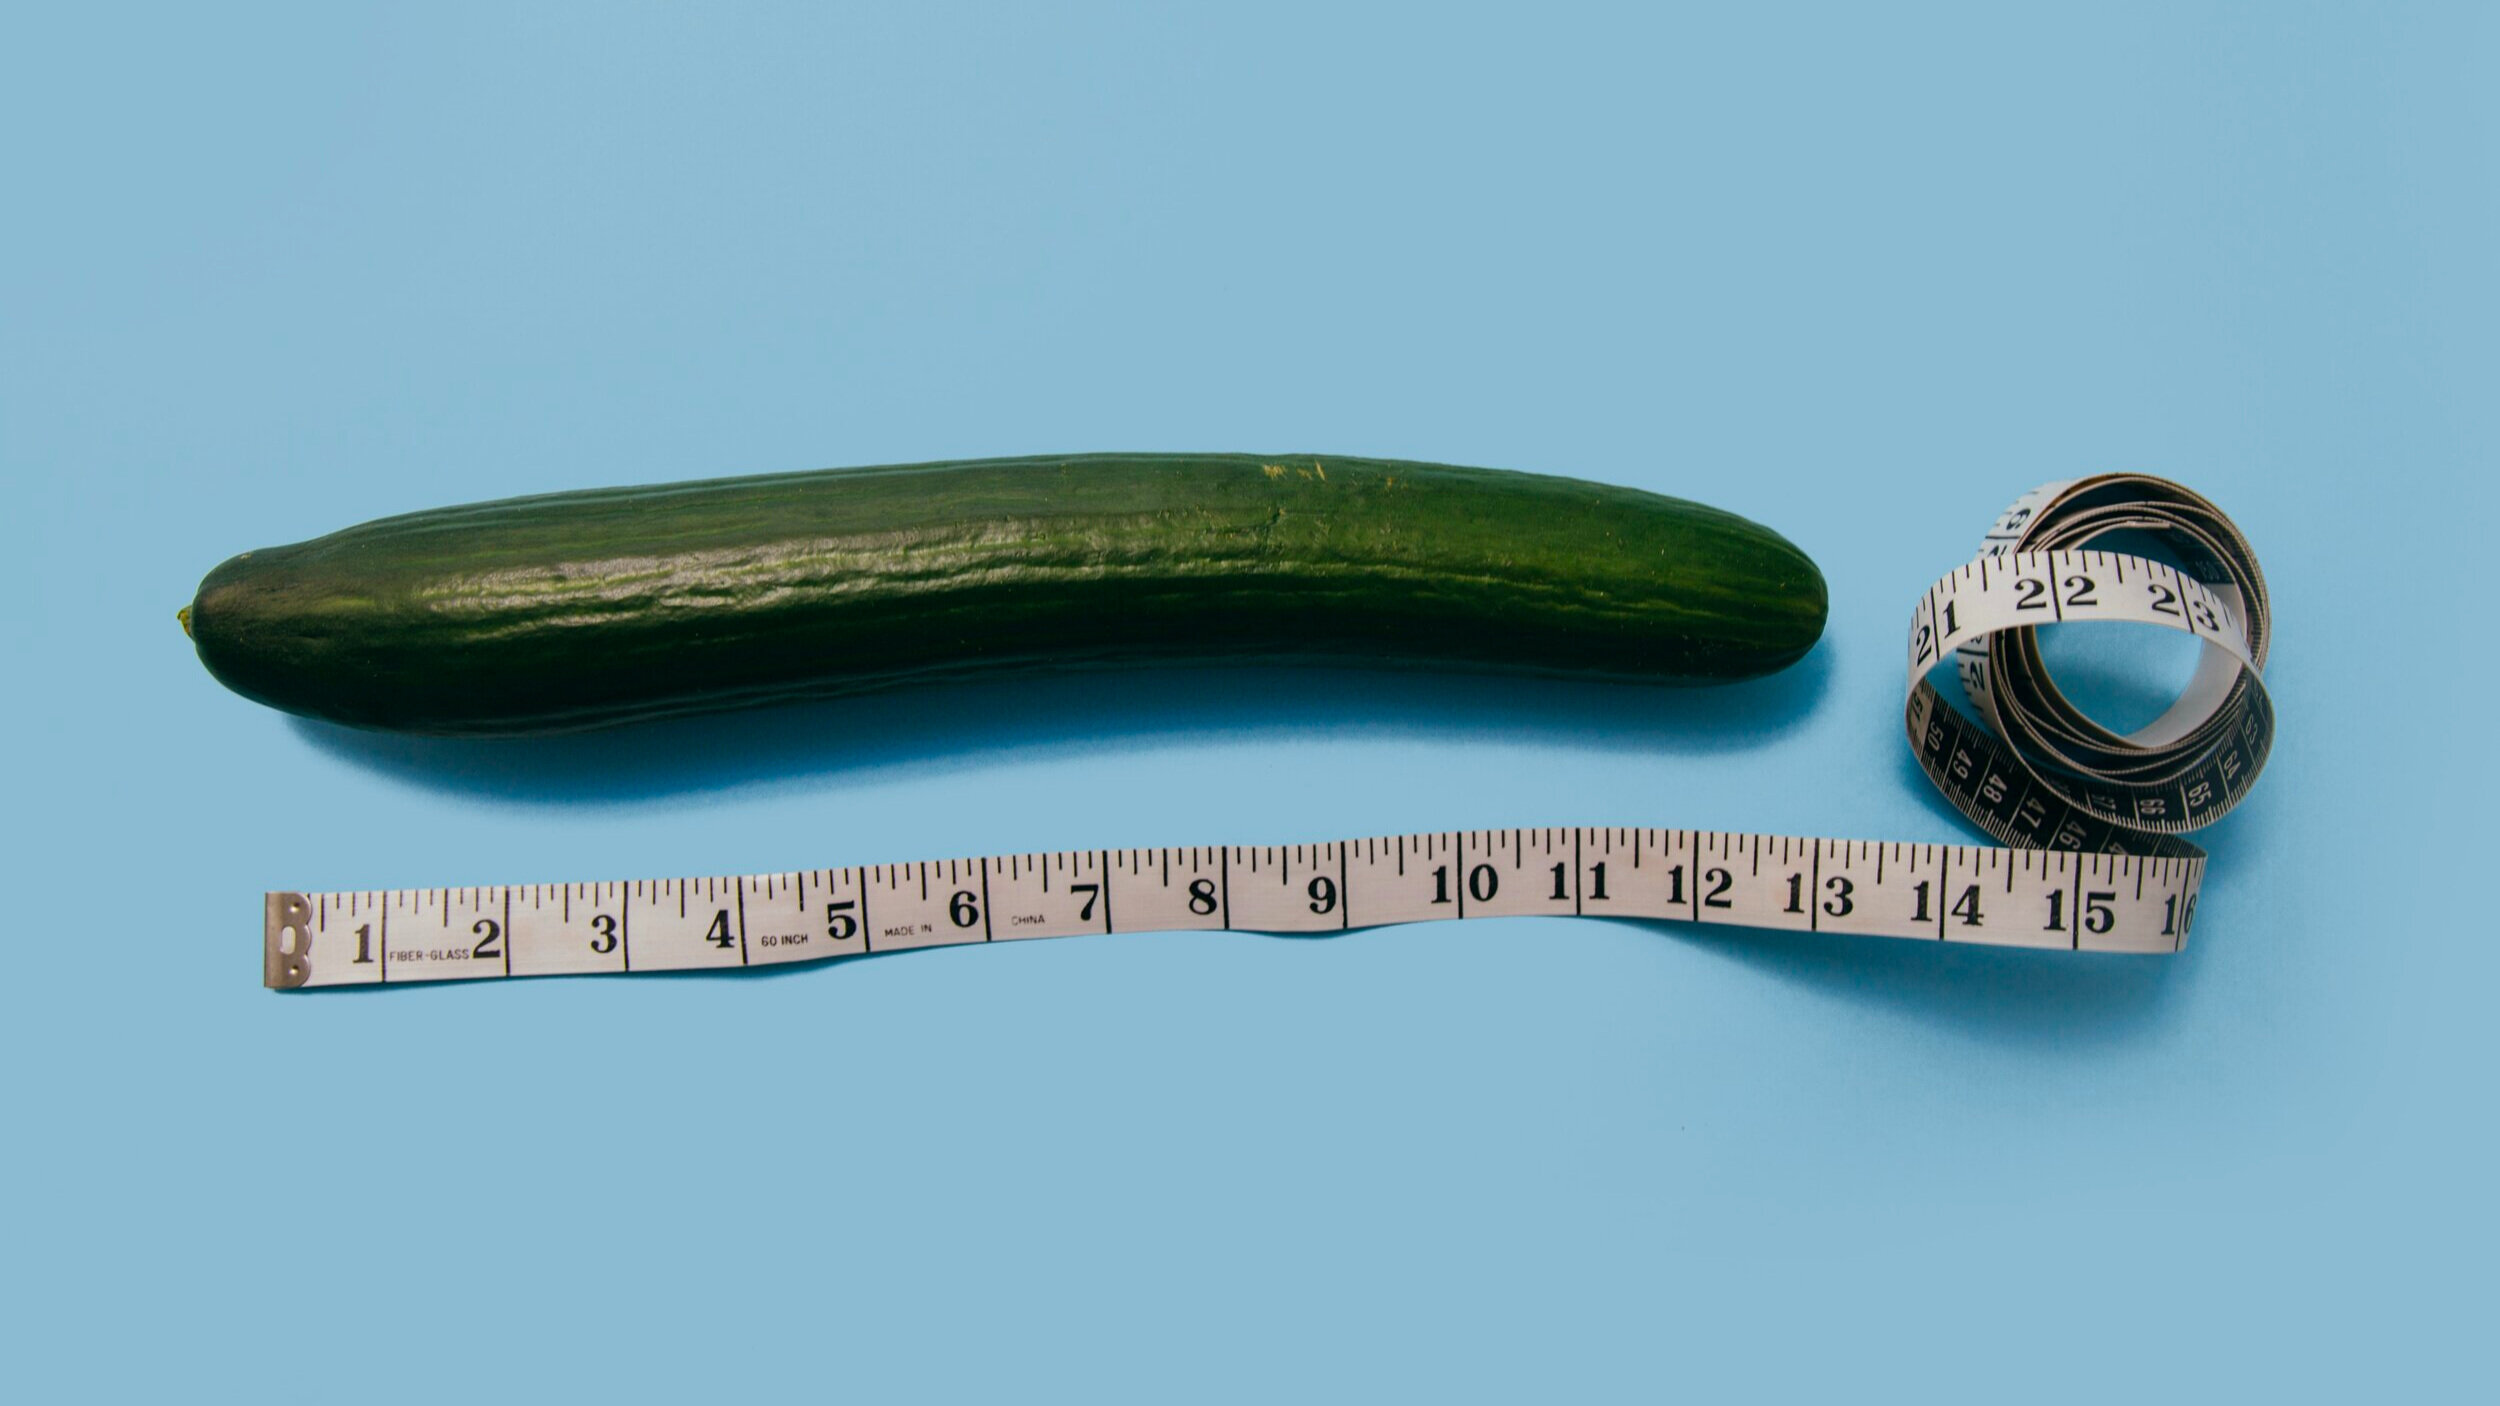 size-does-matter-cucumber-measurement